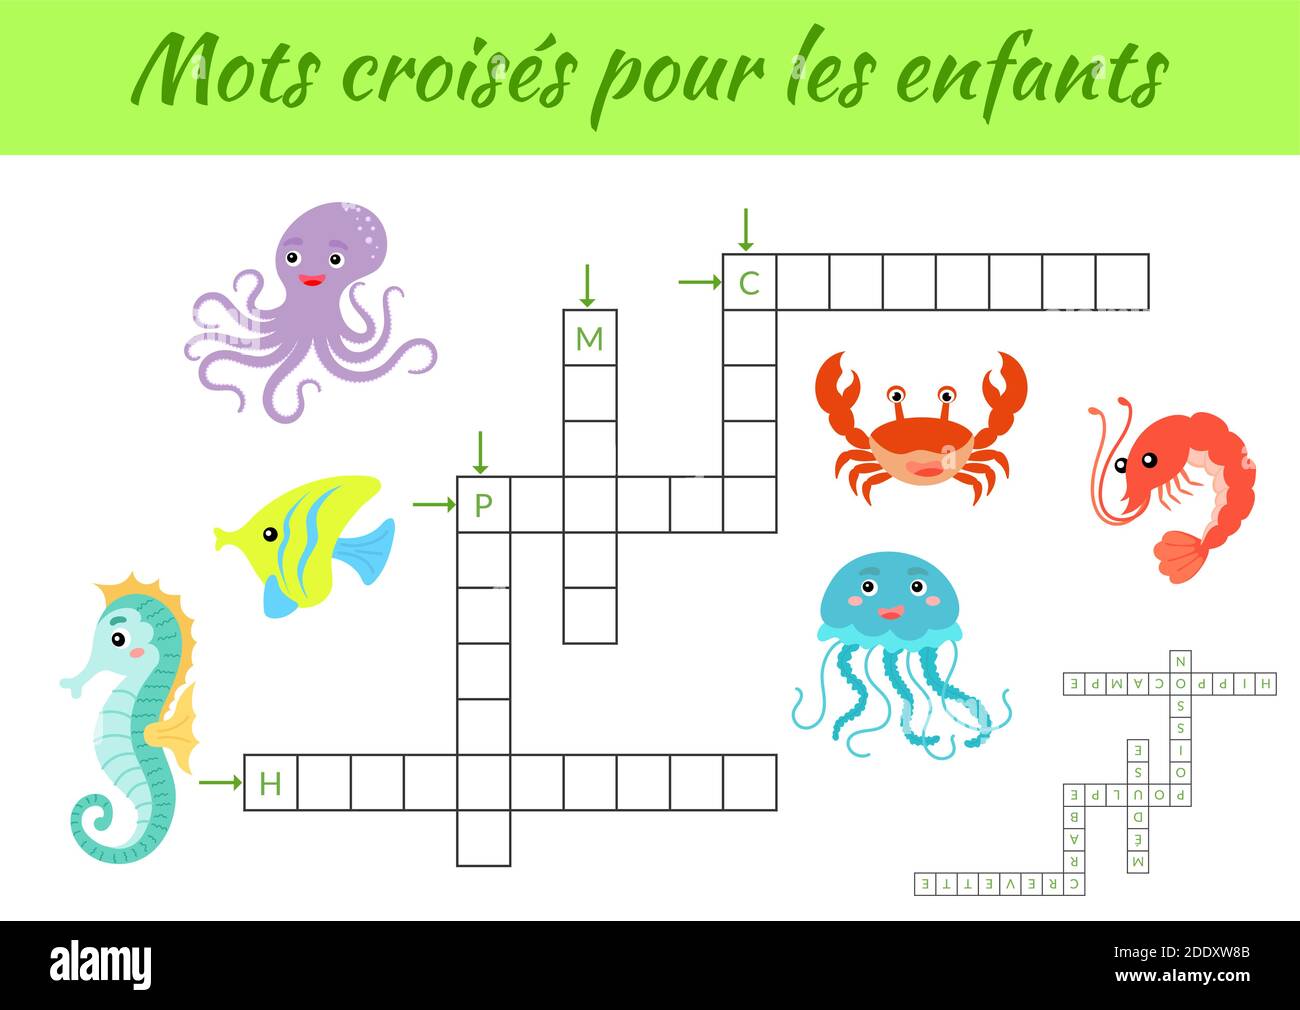 Mots croisés pour les enfants - Crossword for kids. Crossword game with pictures. Kids activity worksheet colorful printable version. Stock Vector